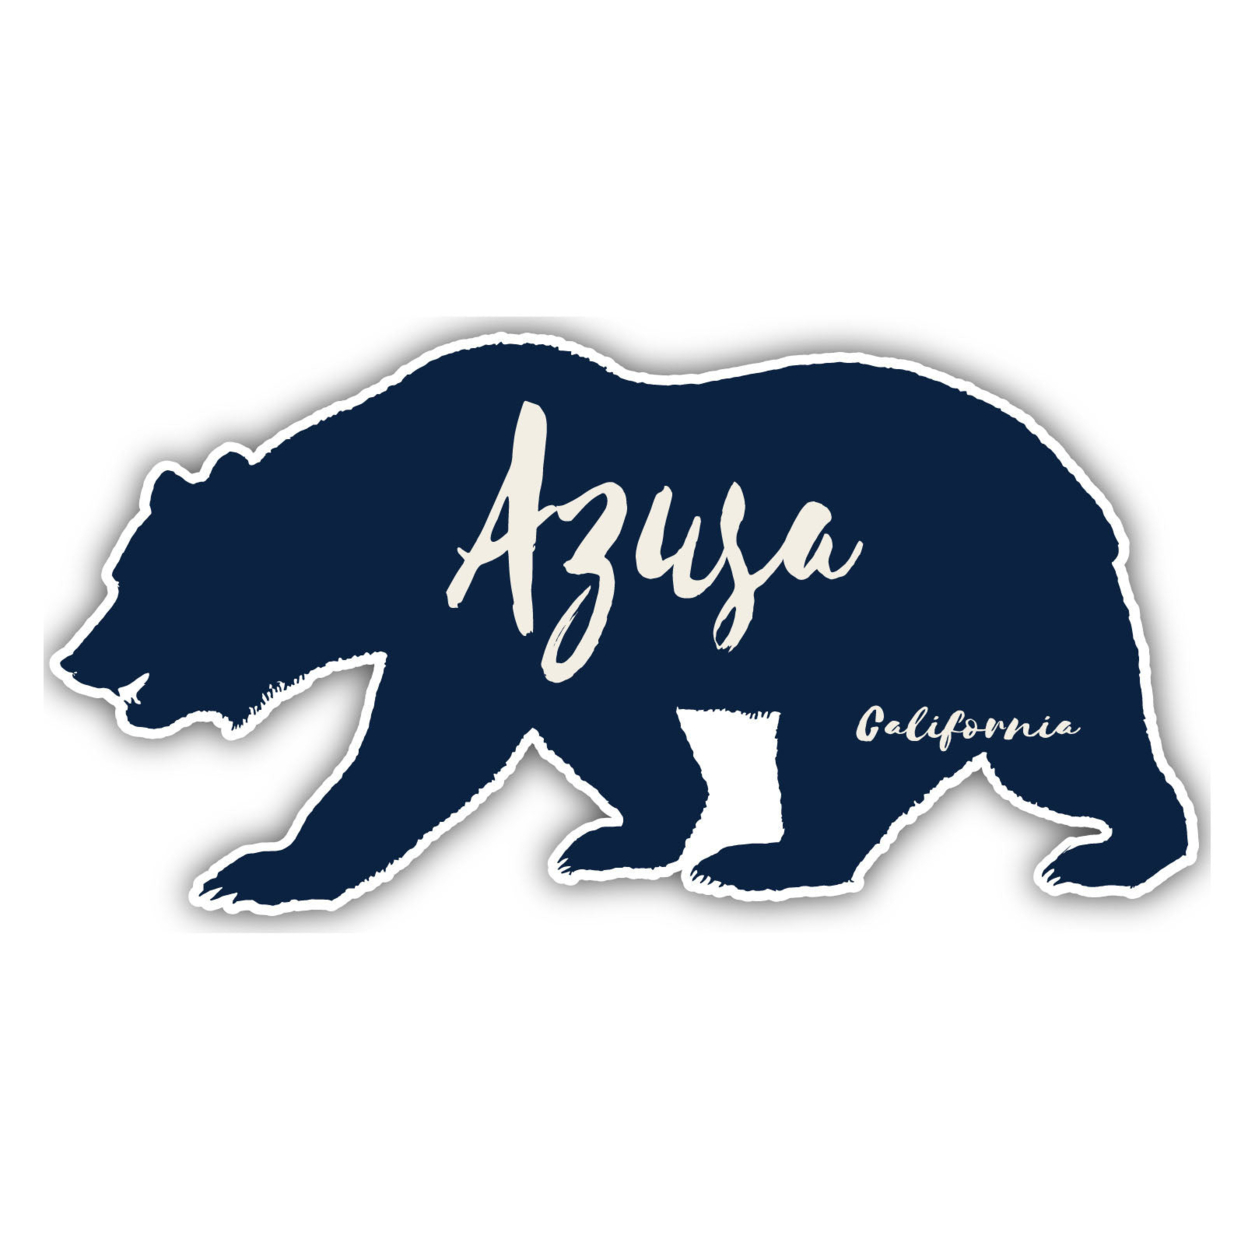 Azusa California Souvenir Decorative Stickers (Choose Theme And Size) - 4-Pack, 4-Inch, Bear